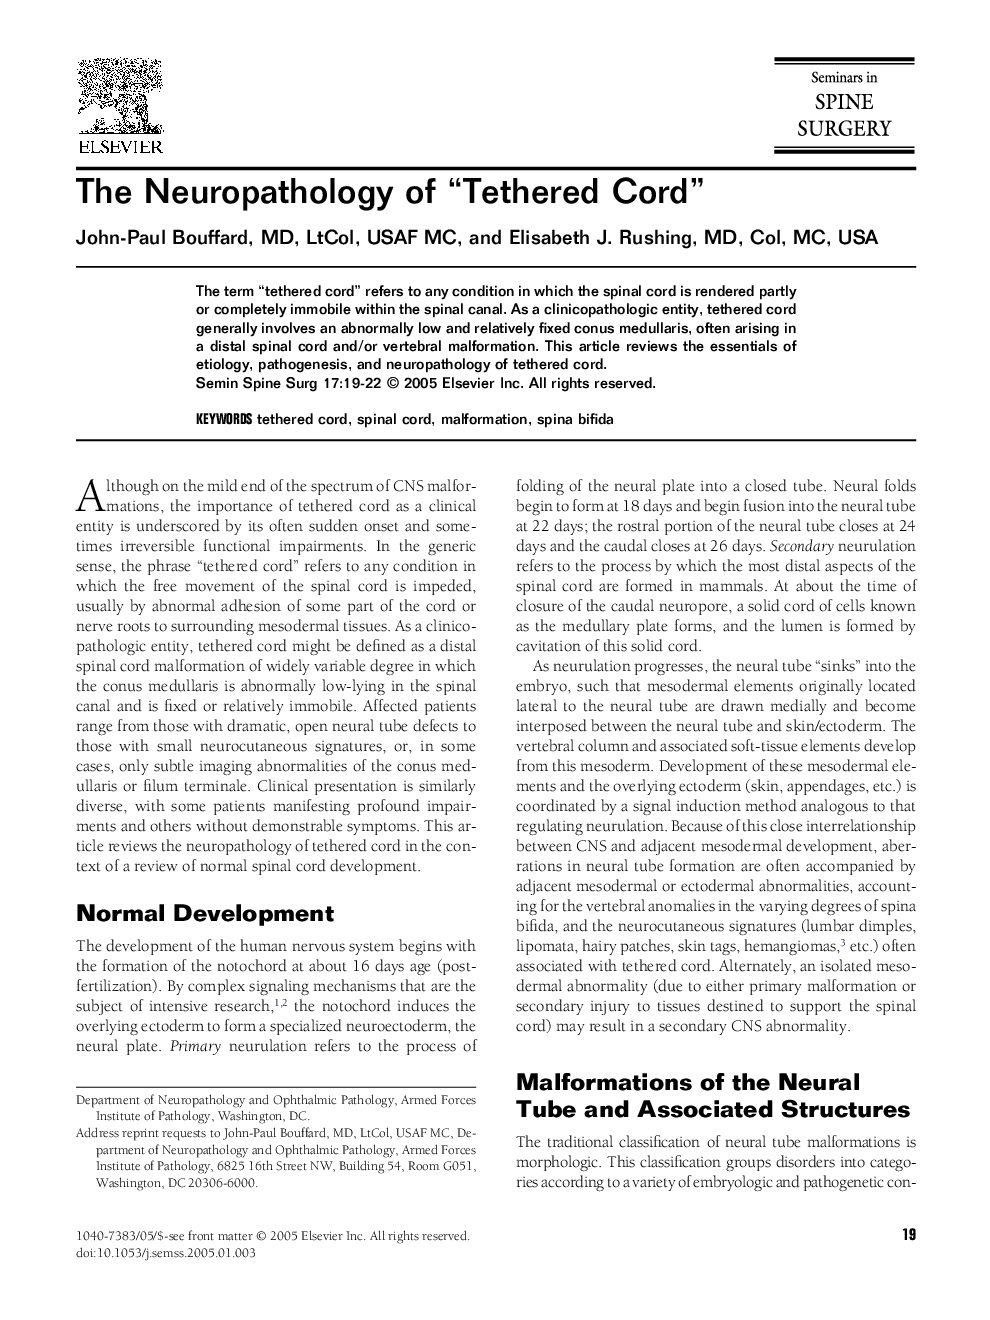 The neuropathology of “tethered cord”